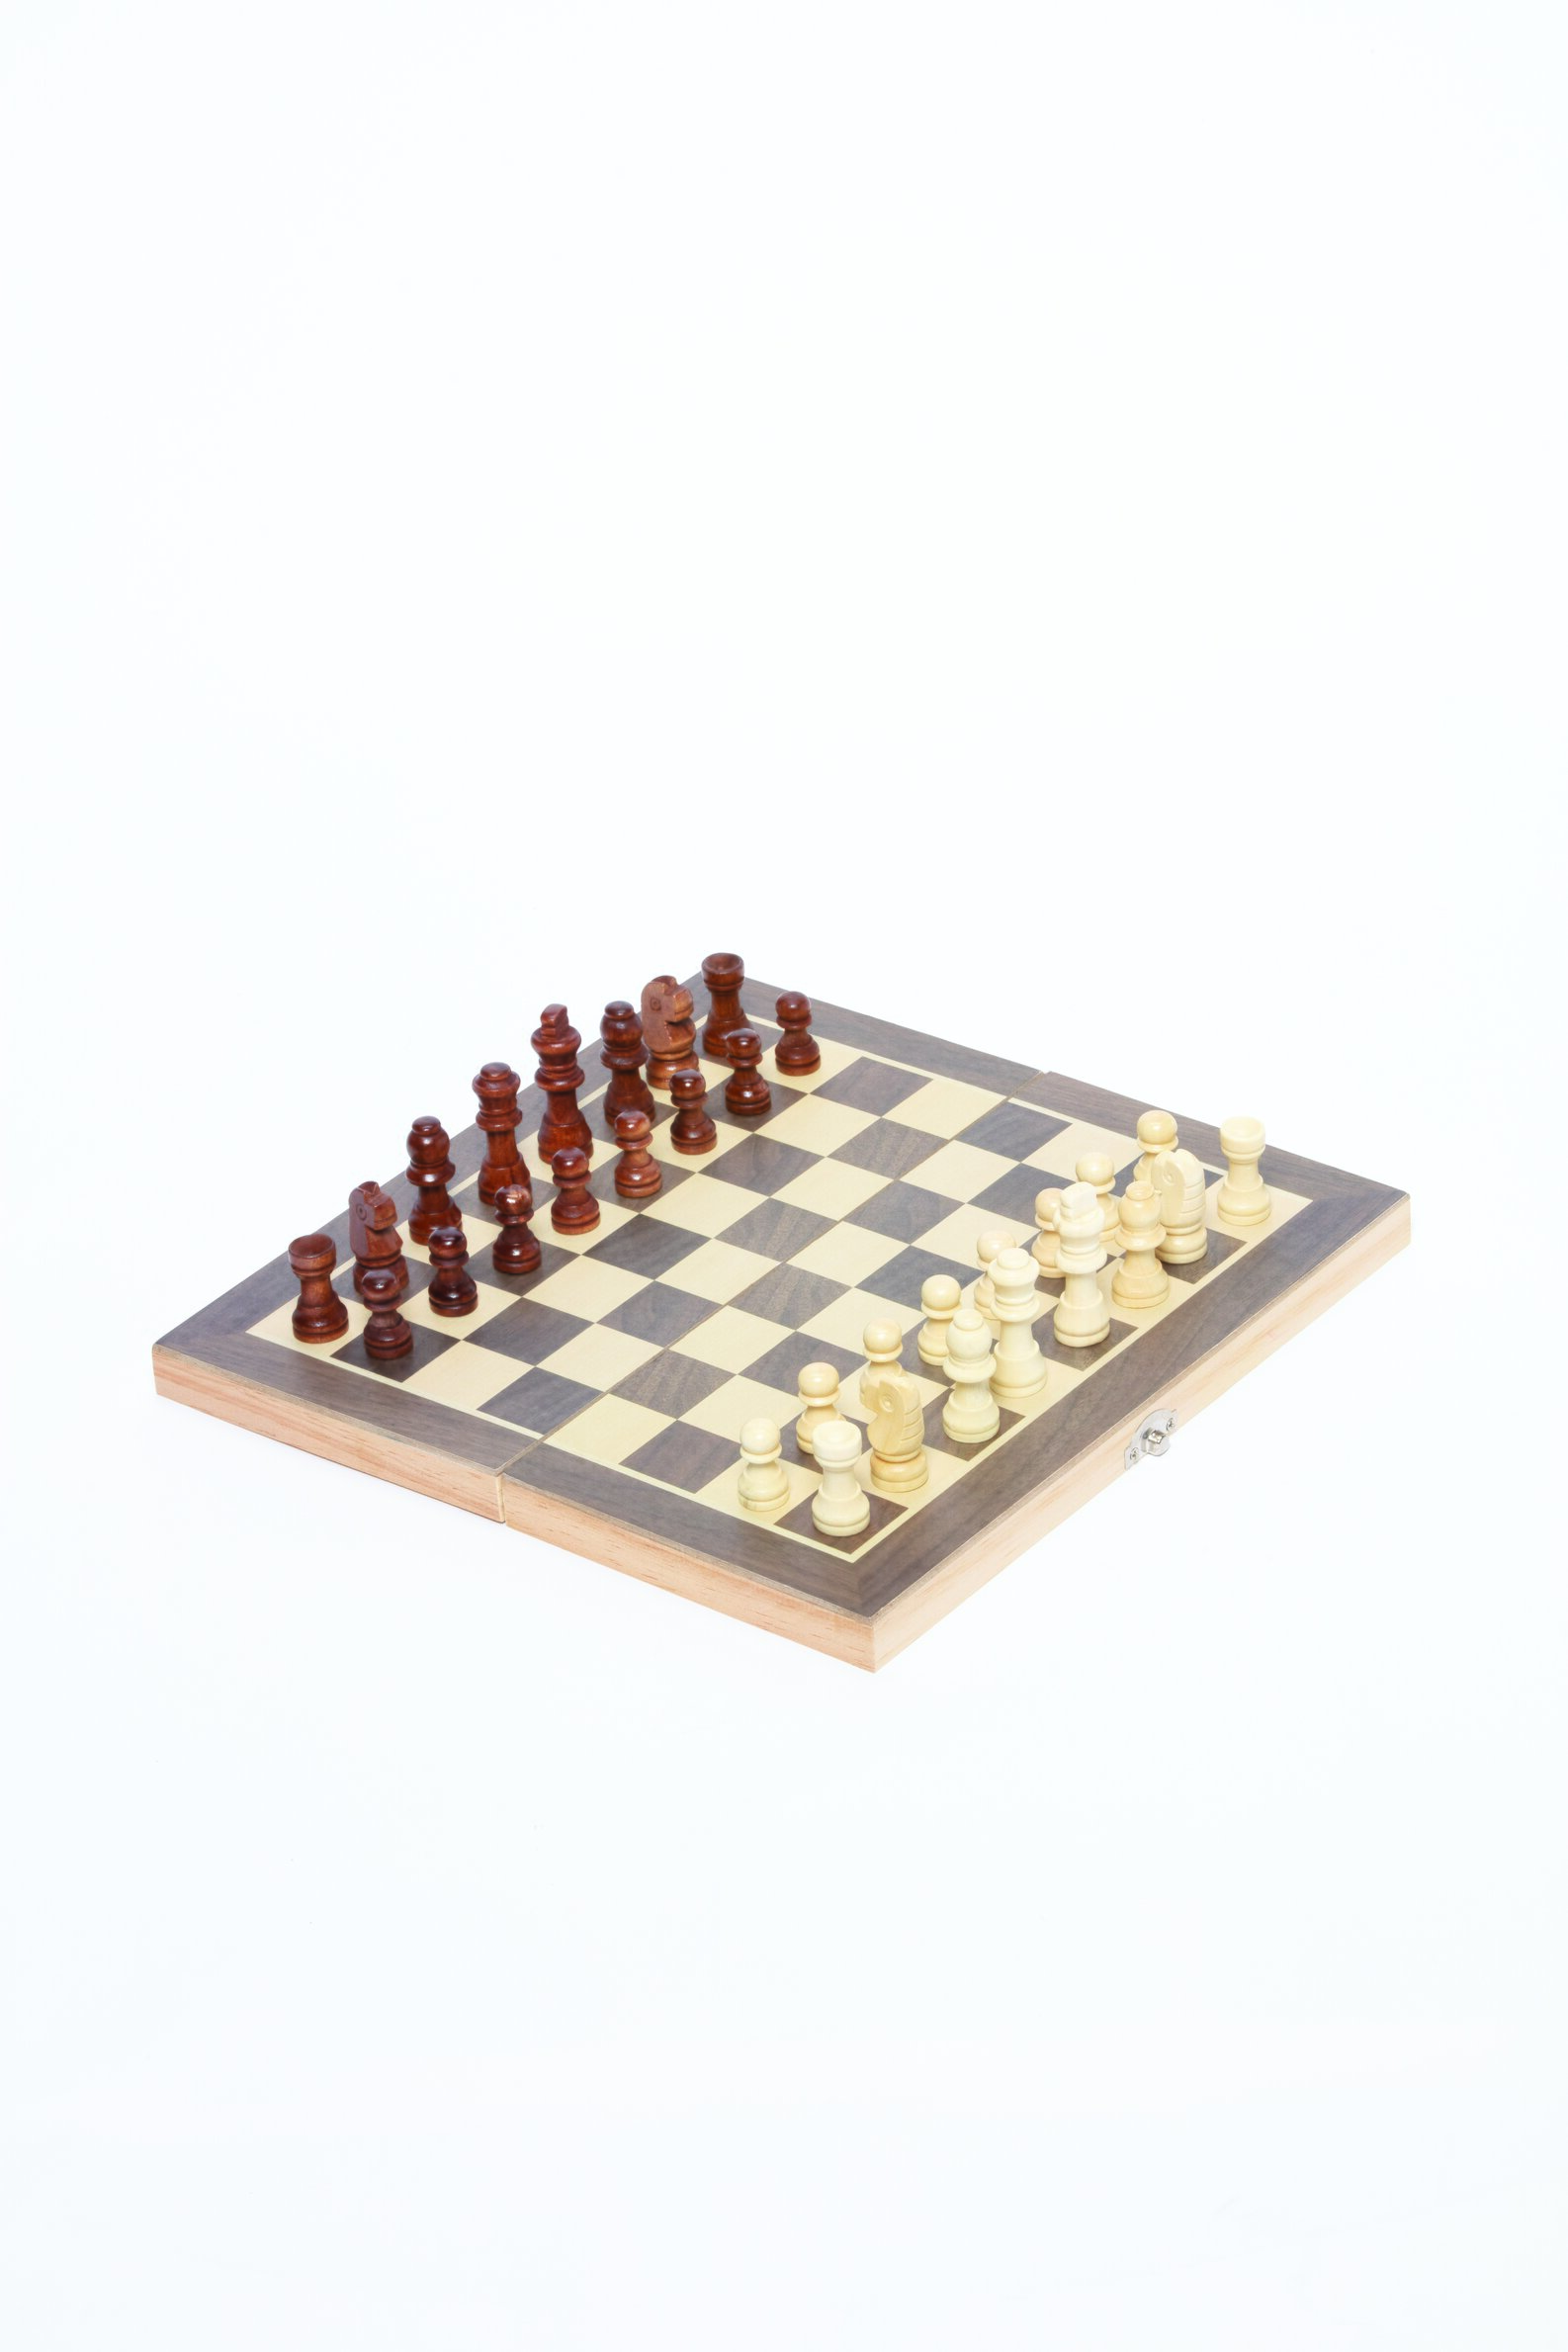 Poderia ALGUM SER HUMANO jogar este final de xadrez?